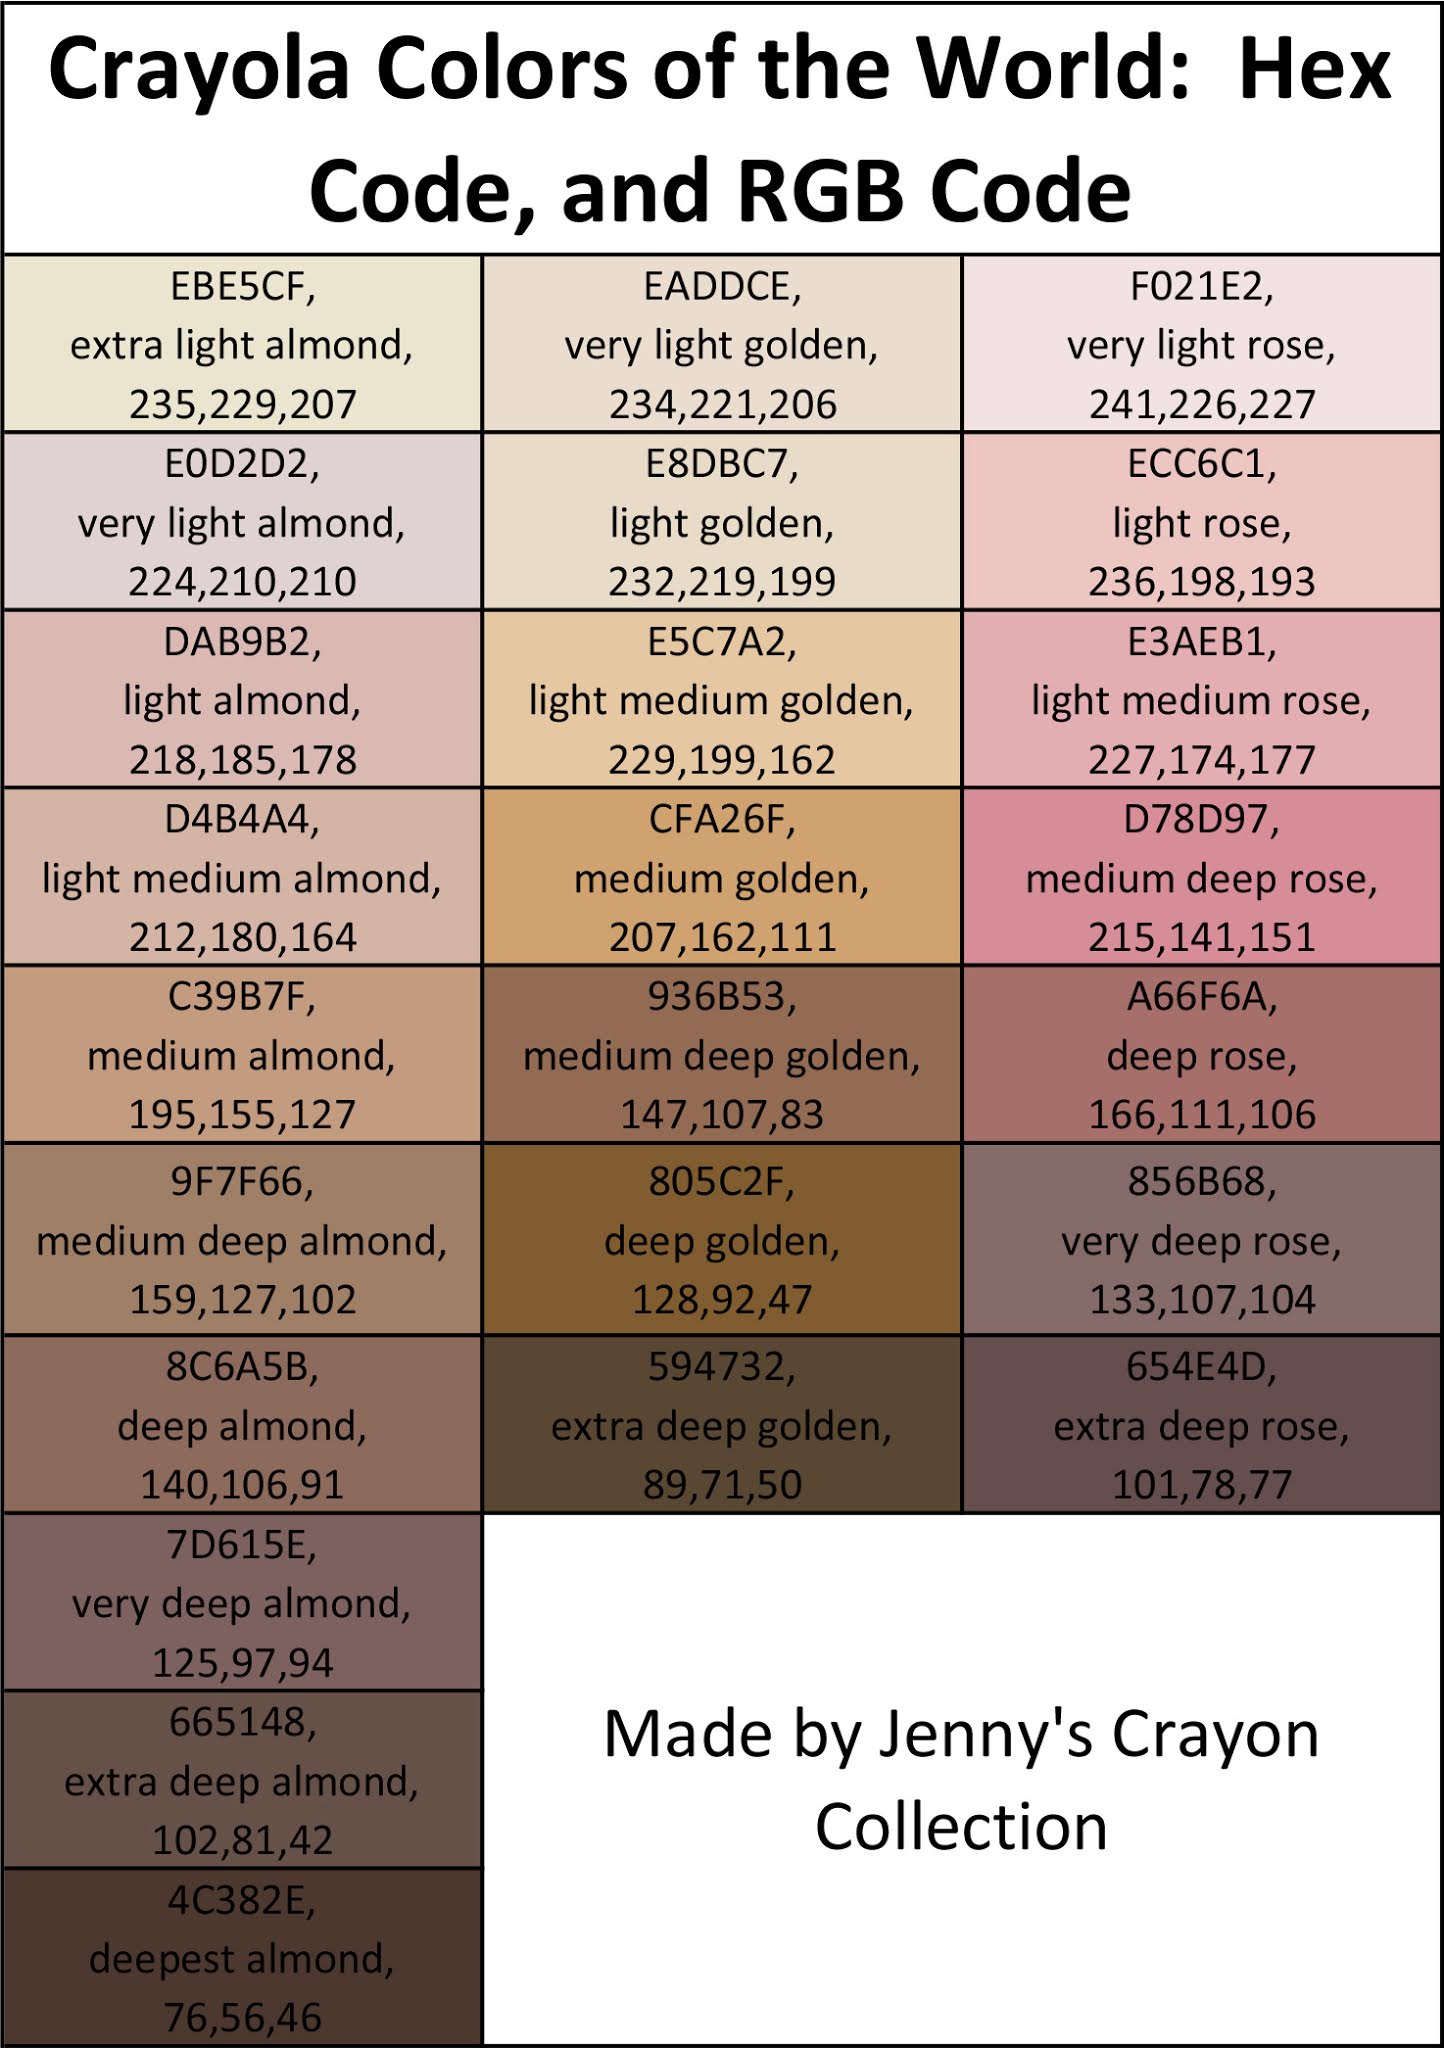 File:Crayola-glitter-crayons.jpg - Wikipedia